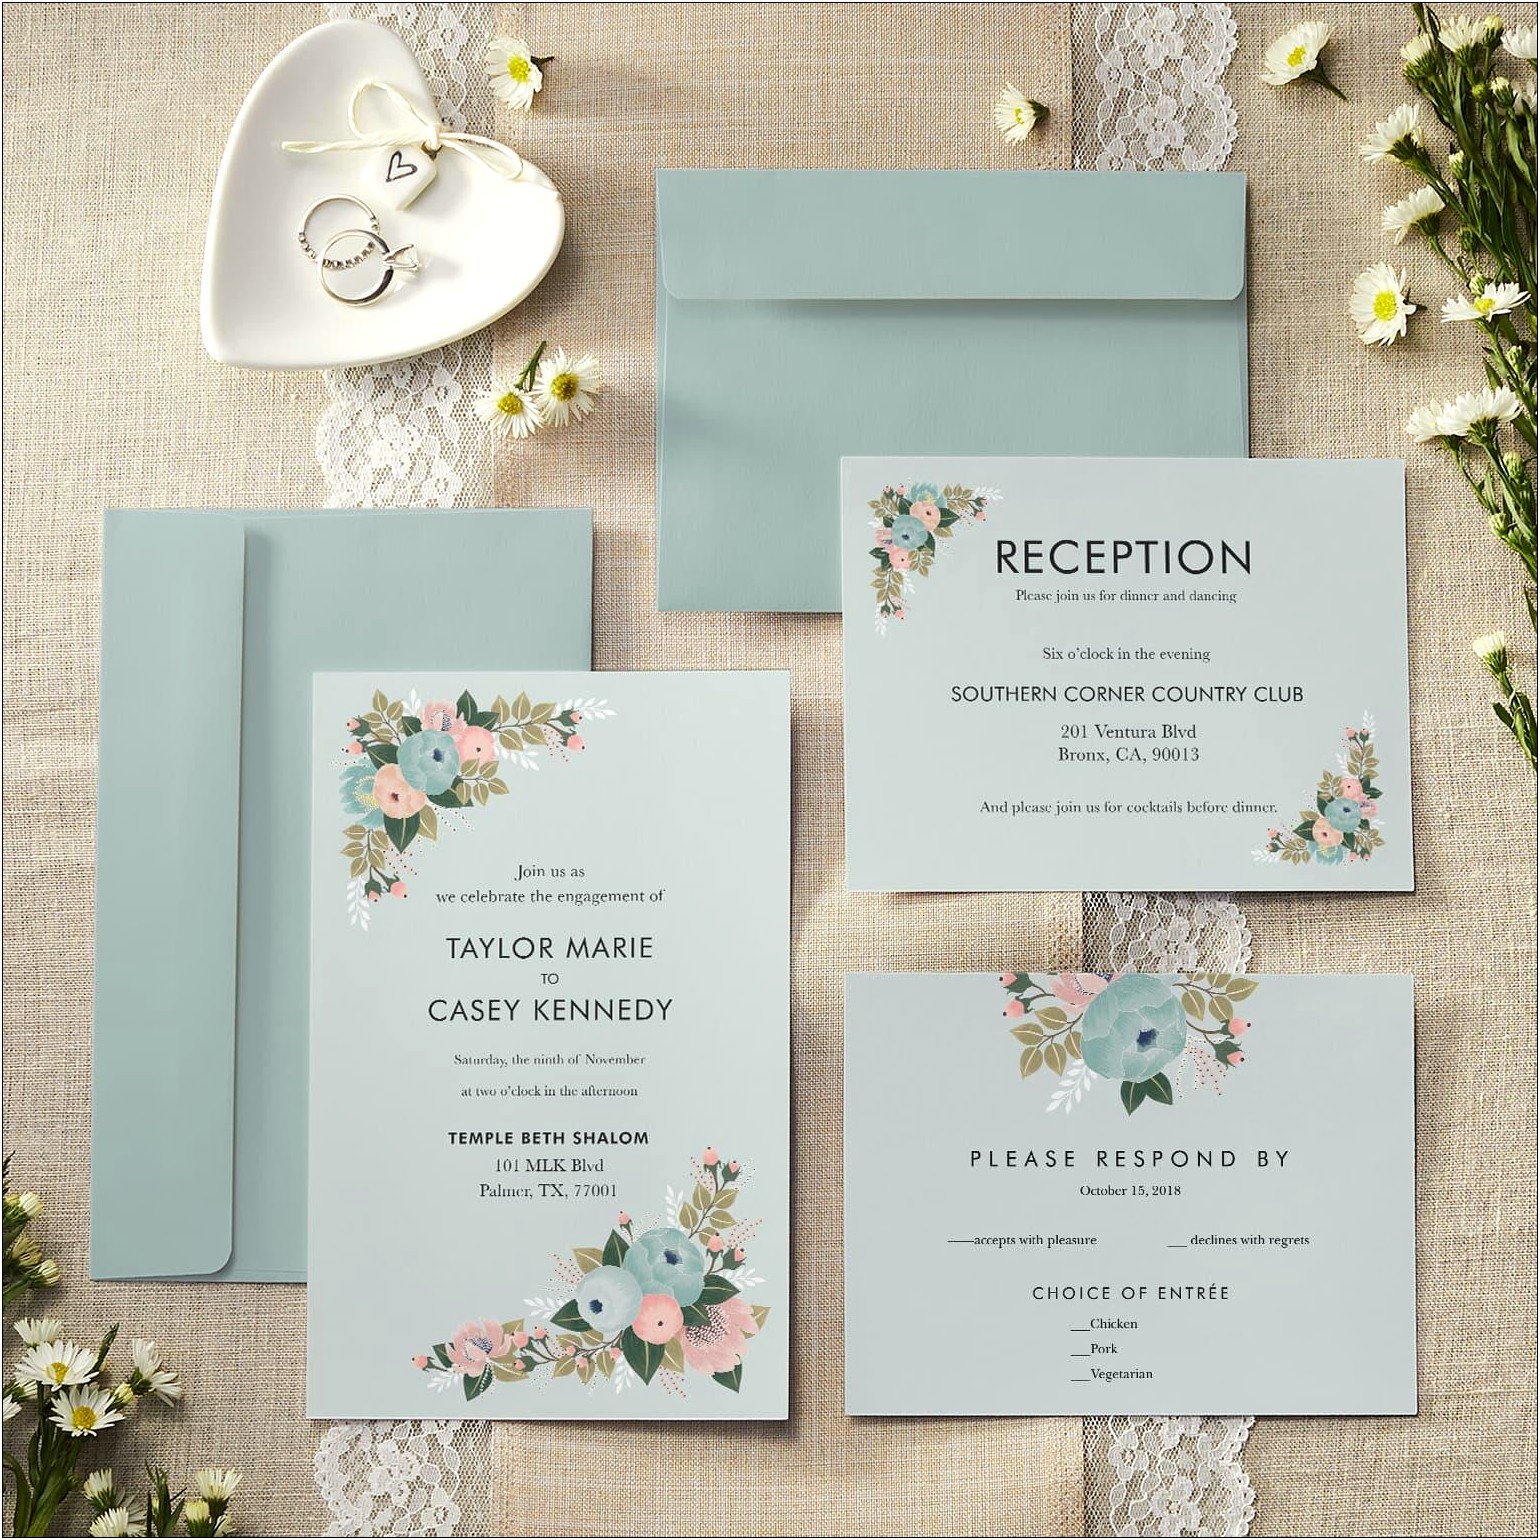 Do Wedding Invitations Need Two Envelopes